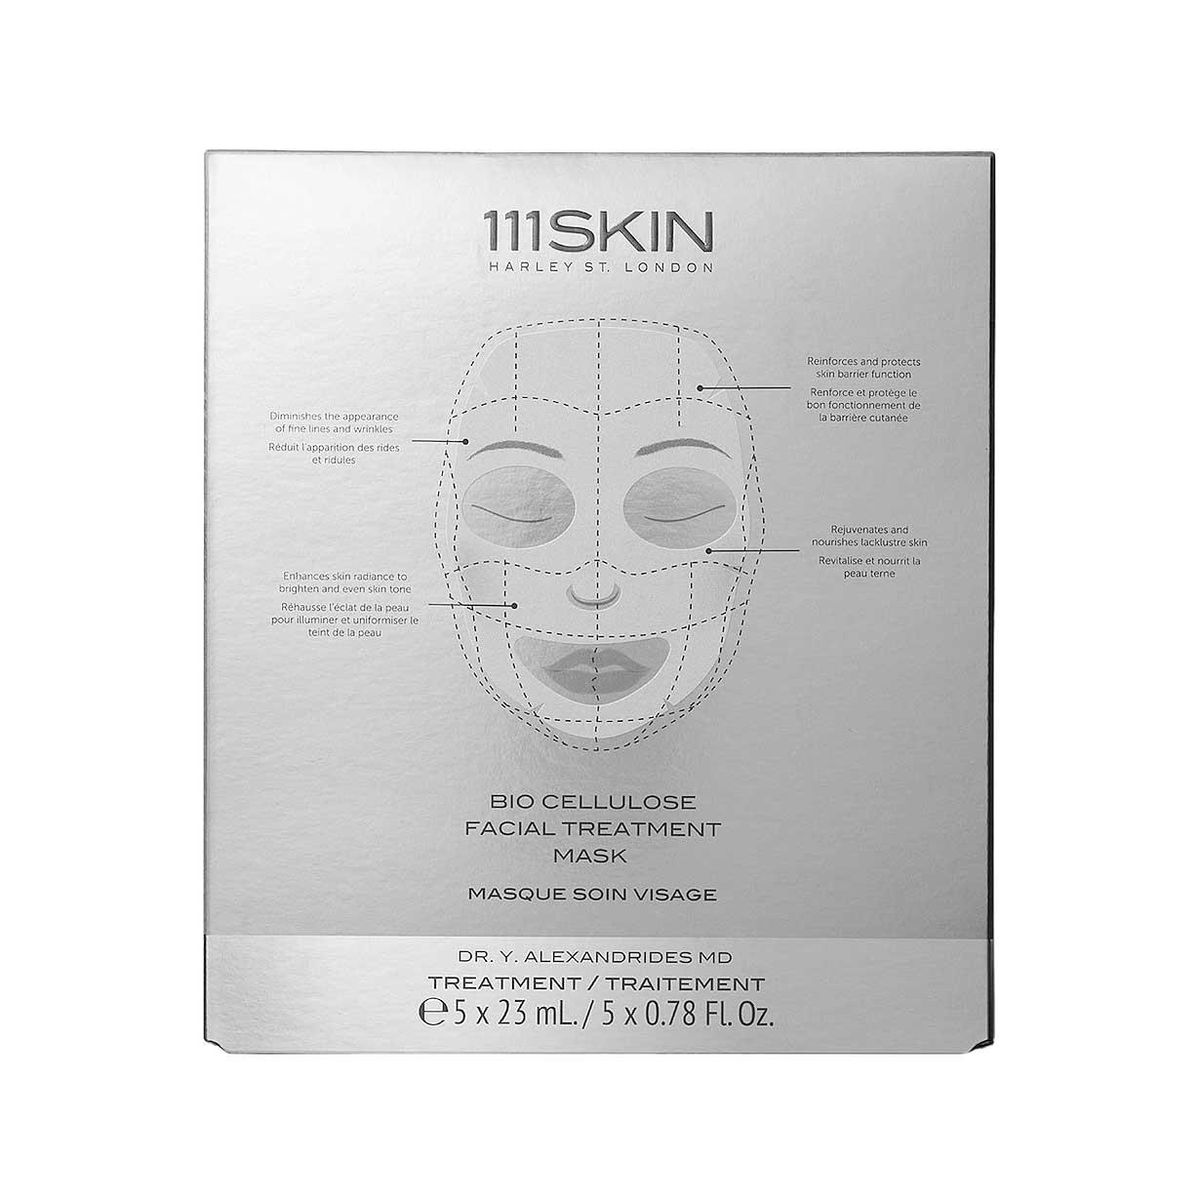 111skin bio cellulose facial treatment mask